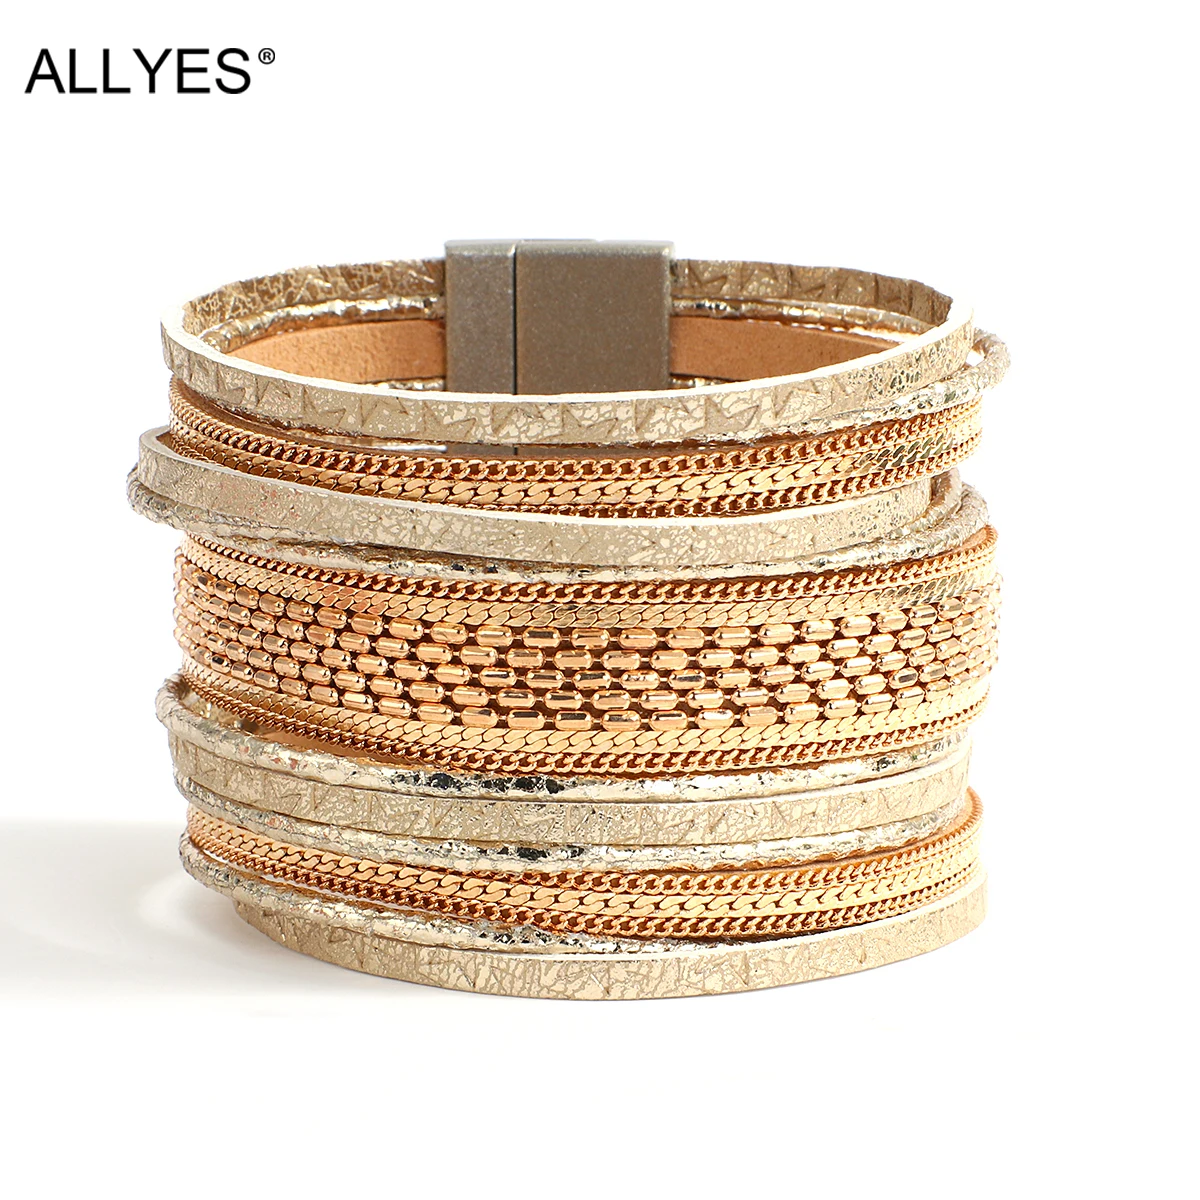 

ALLYES Shiny Genuine Leather Bracelets for Women Fashion Wide Wrap Bracelet Bangle Wristband Statement Jewelry Gifts